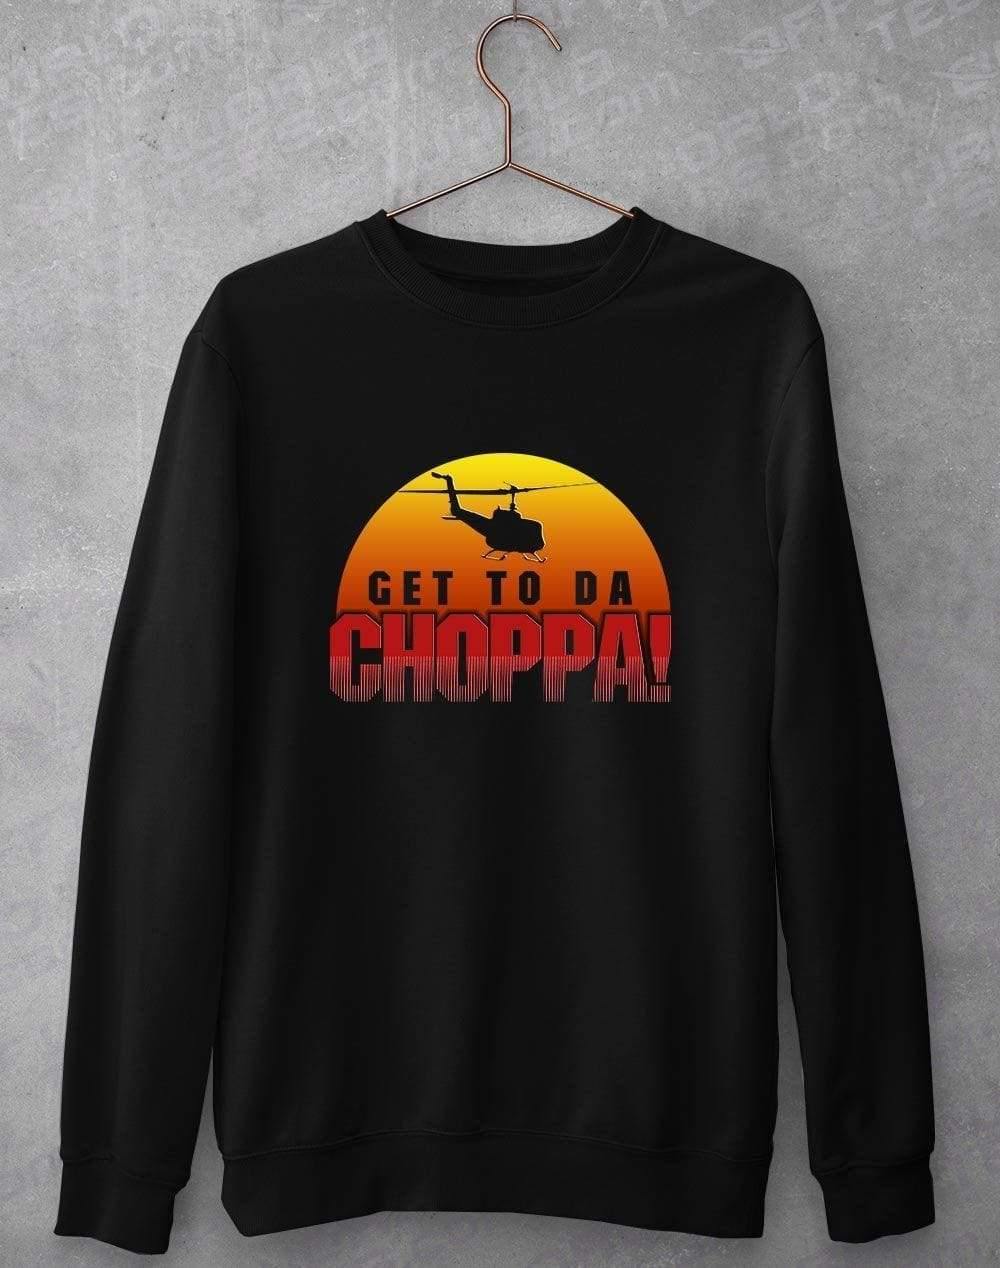 Get to da Choppa Sweatshirt S / Black  - Off World Tees